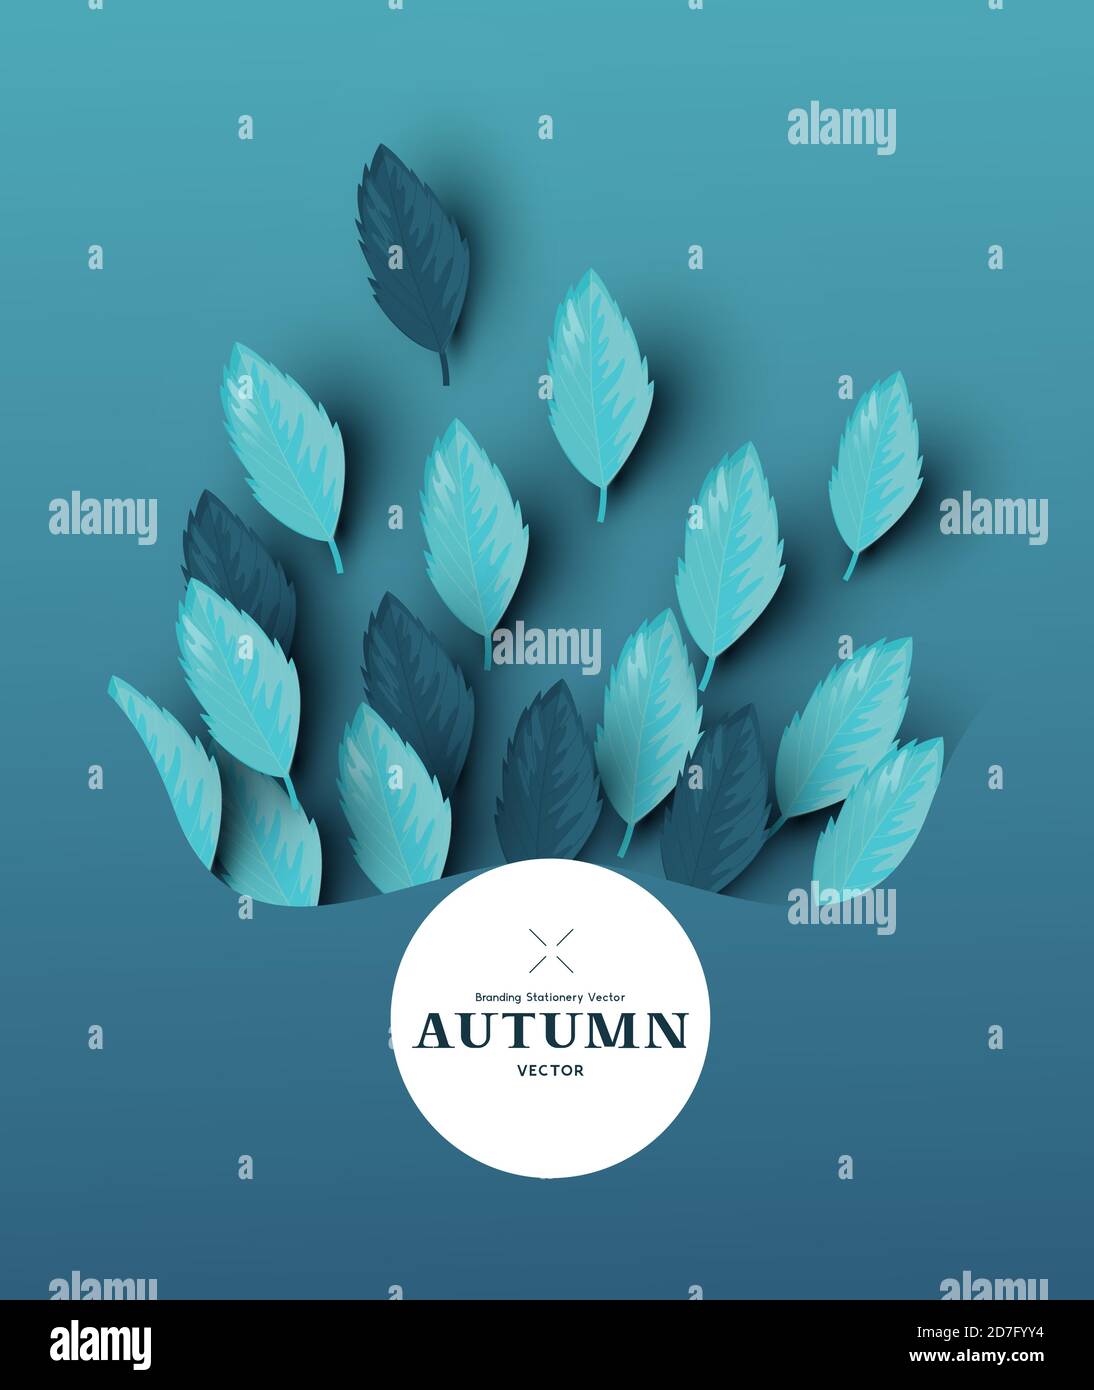 Abstract autumn seasonal fall leaves background layout. Vector illustration. Stock Vector